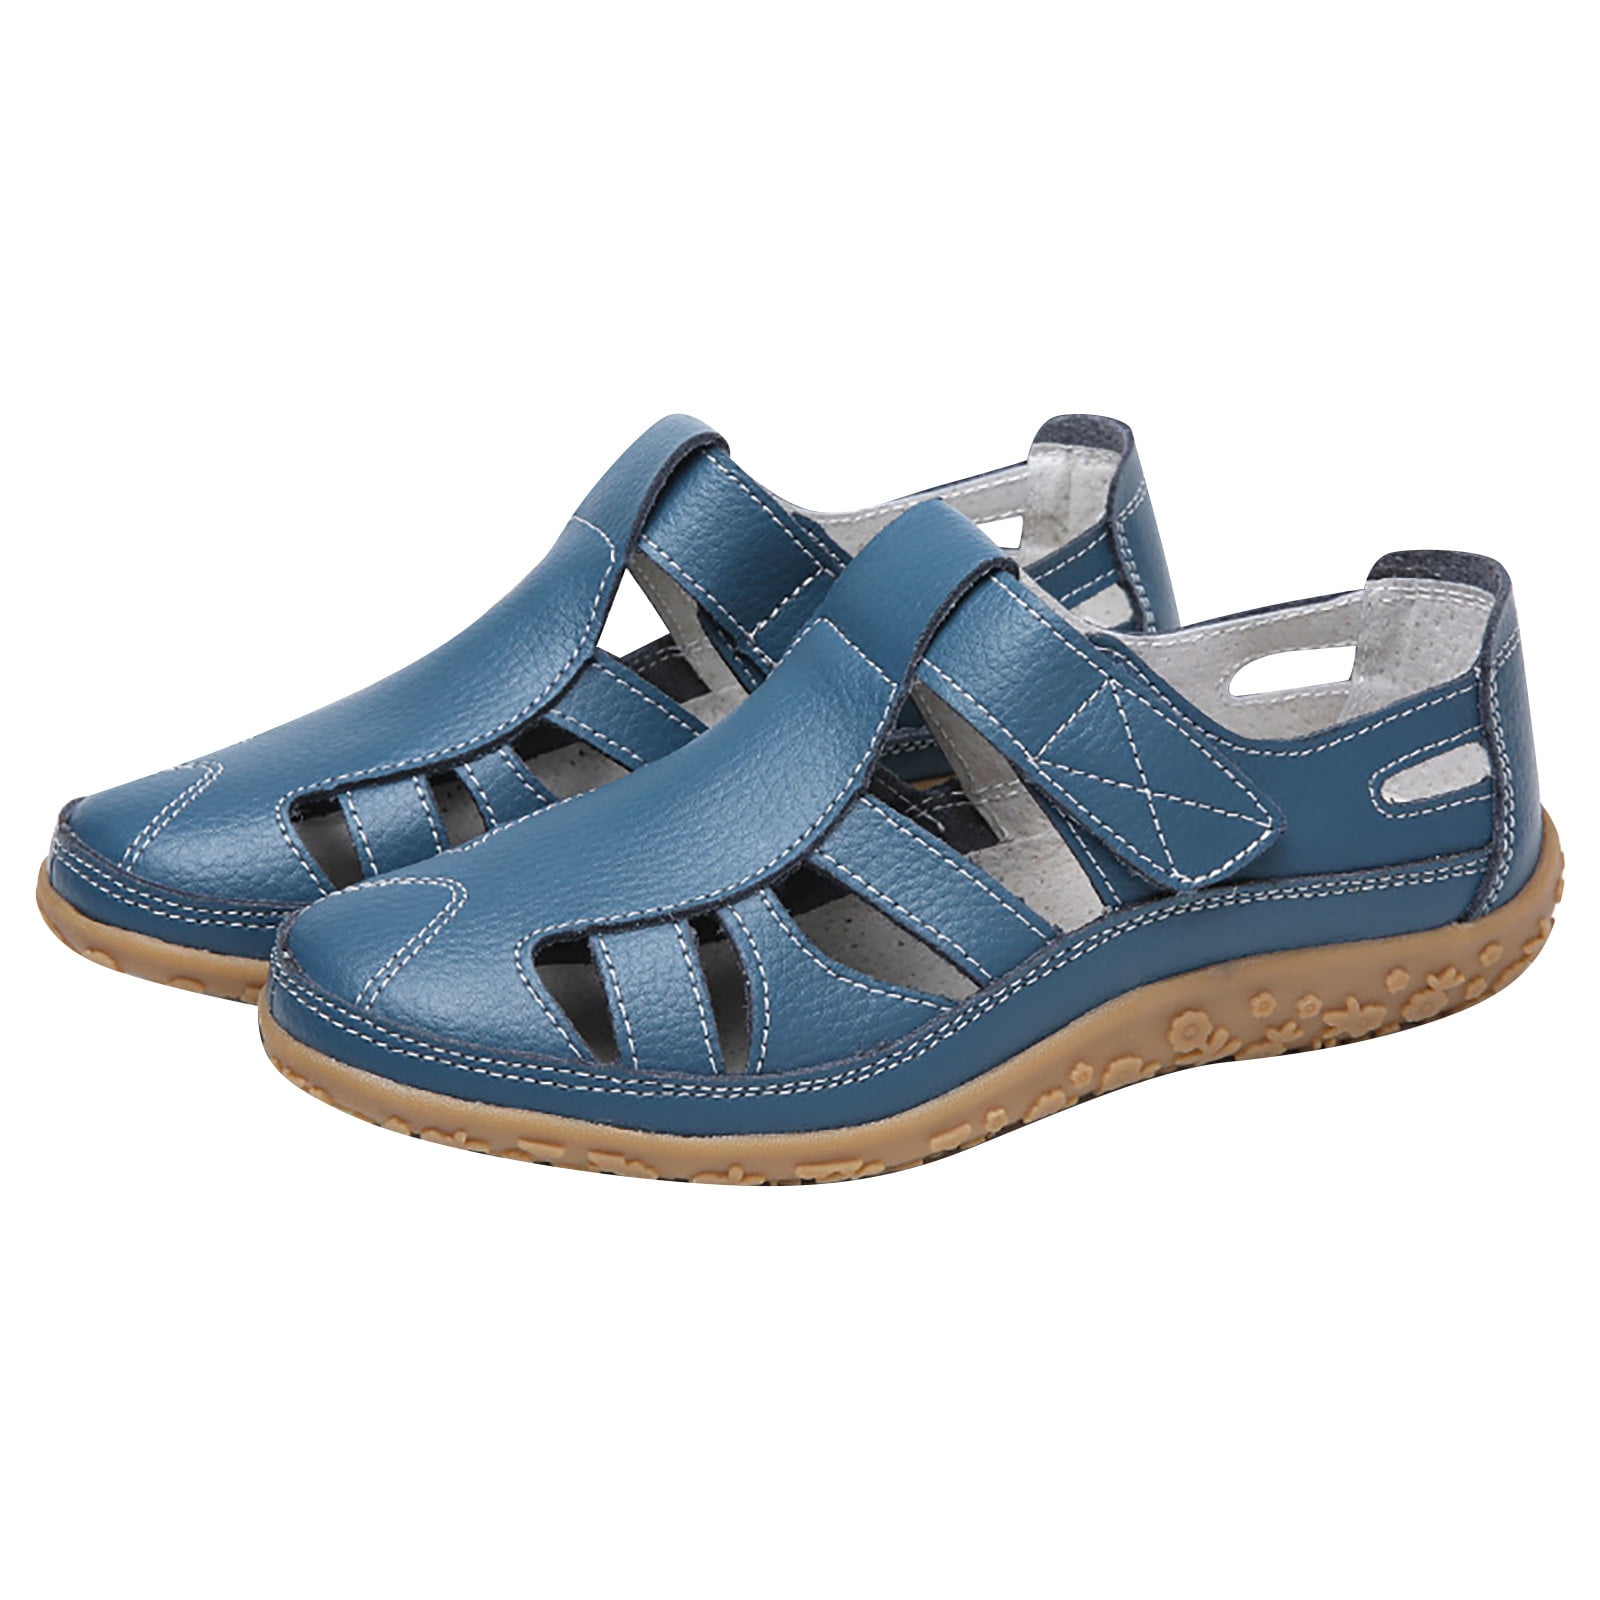 Utoimkio Athletic Hiking Sandals for Women Comfortable Walking Sandals ...